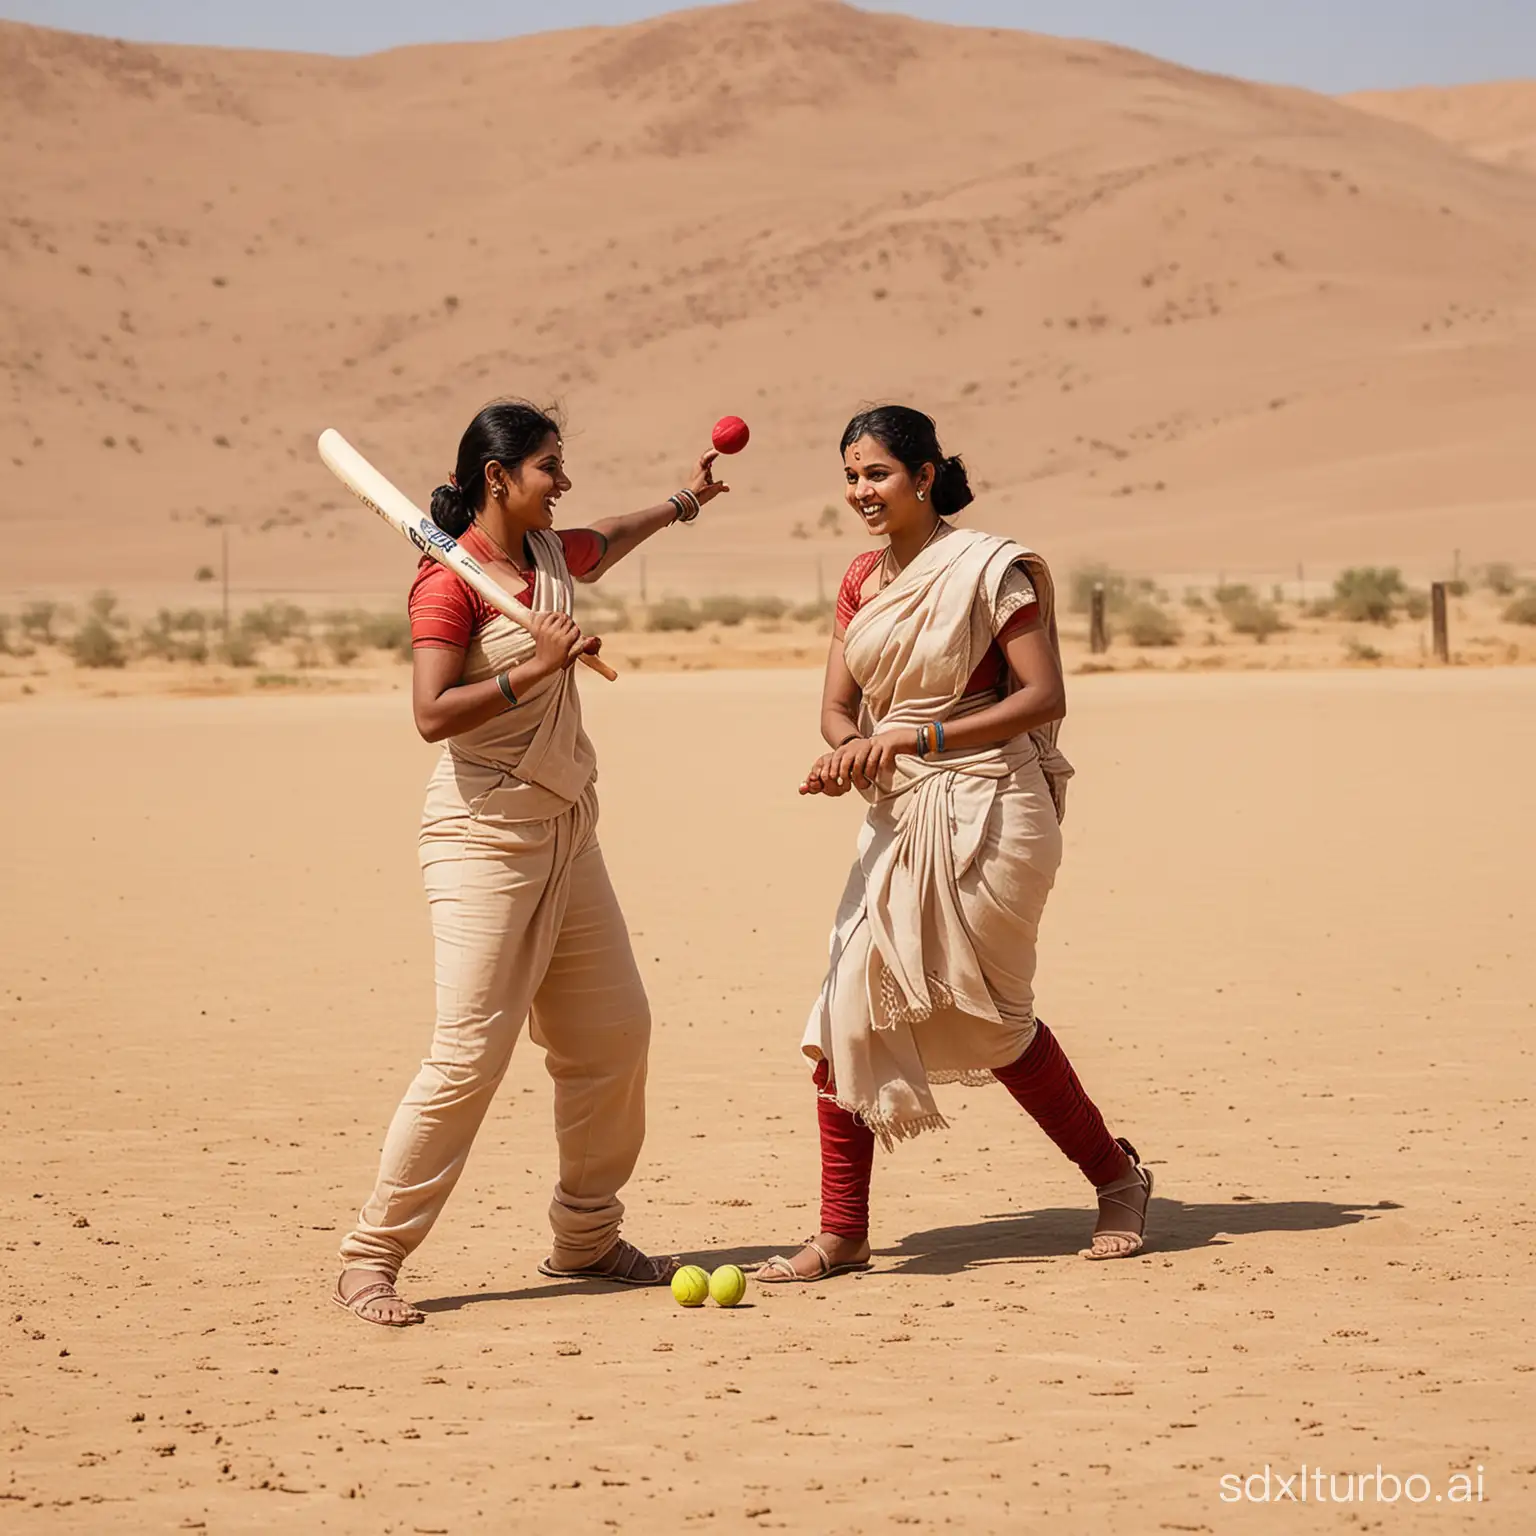 Indian women in saree play cricket in dessert